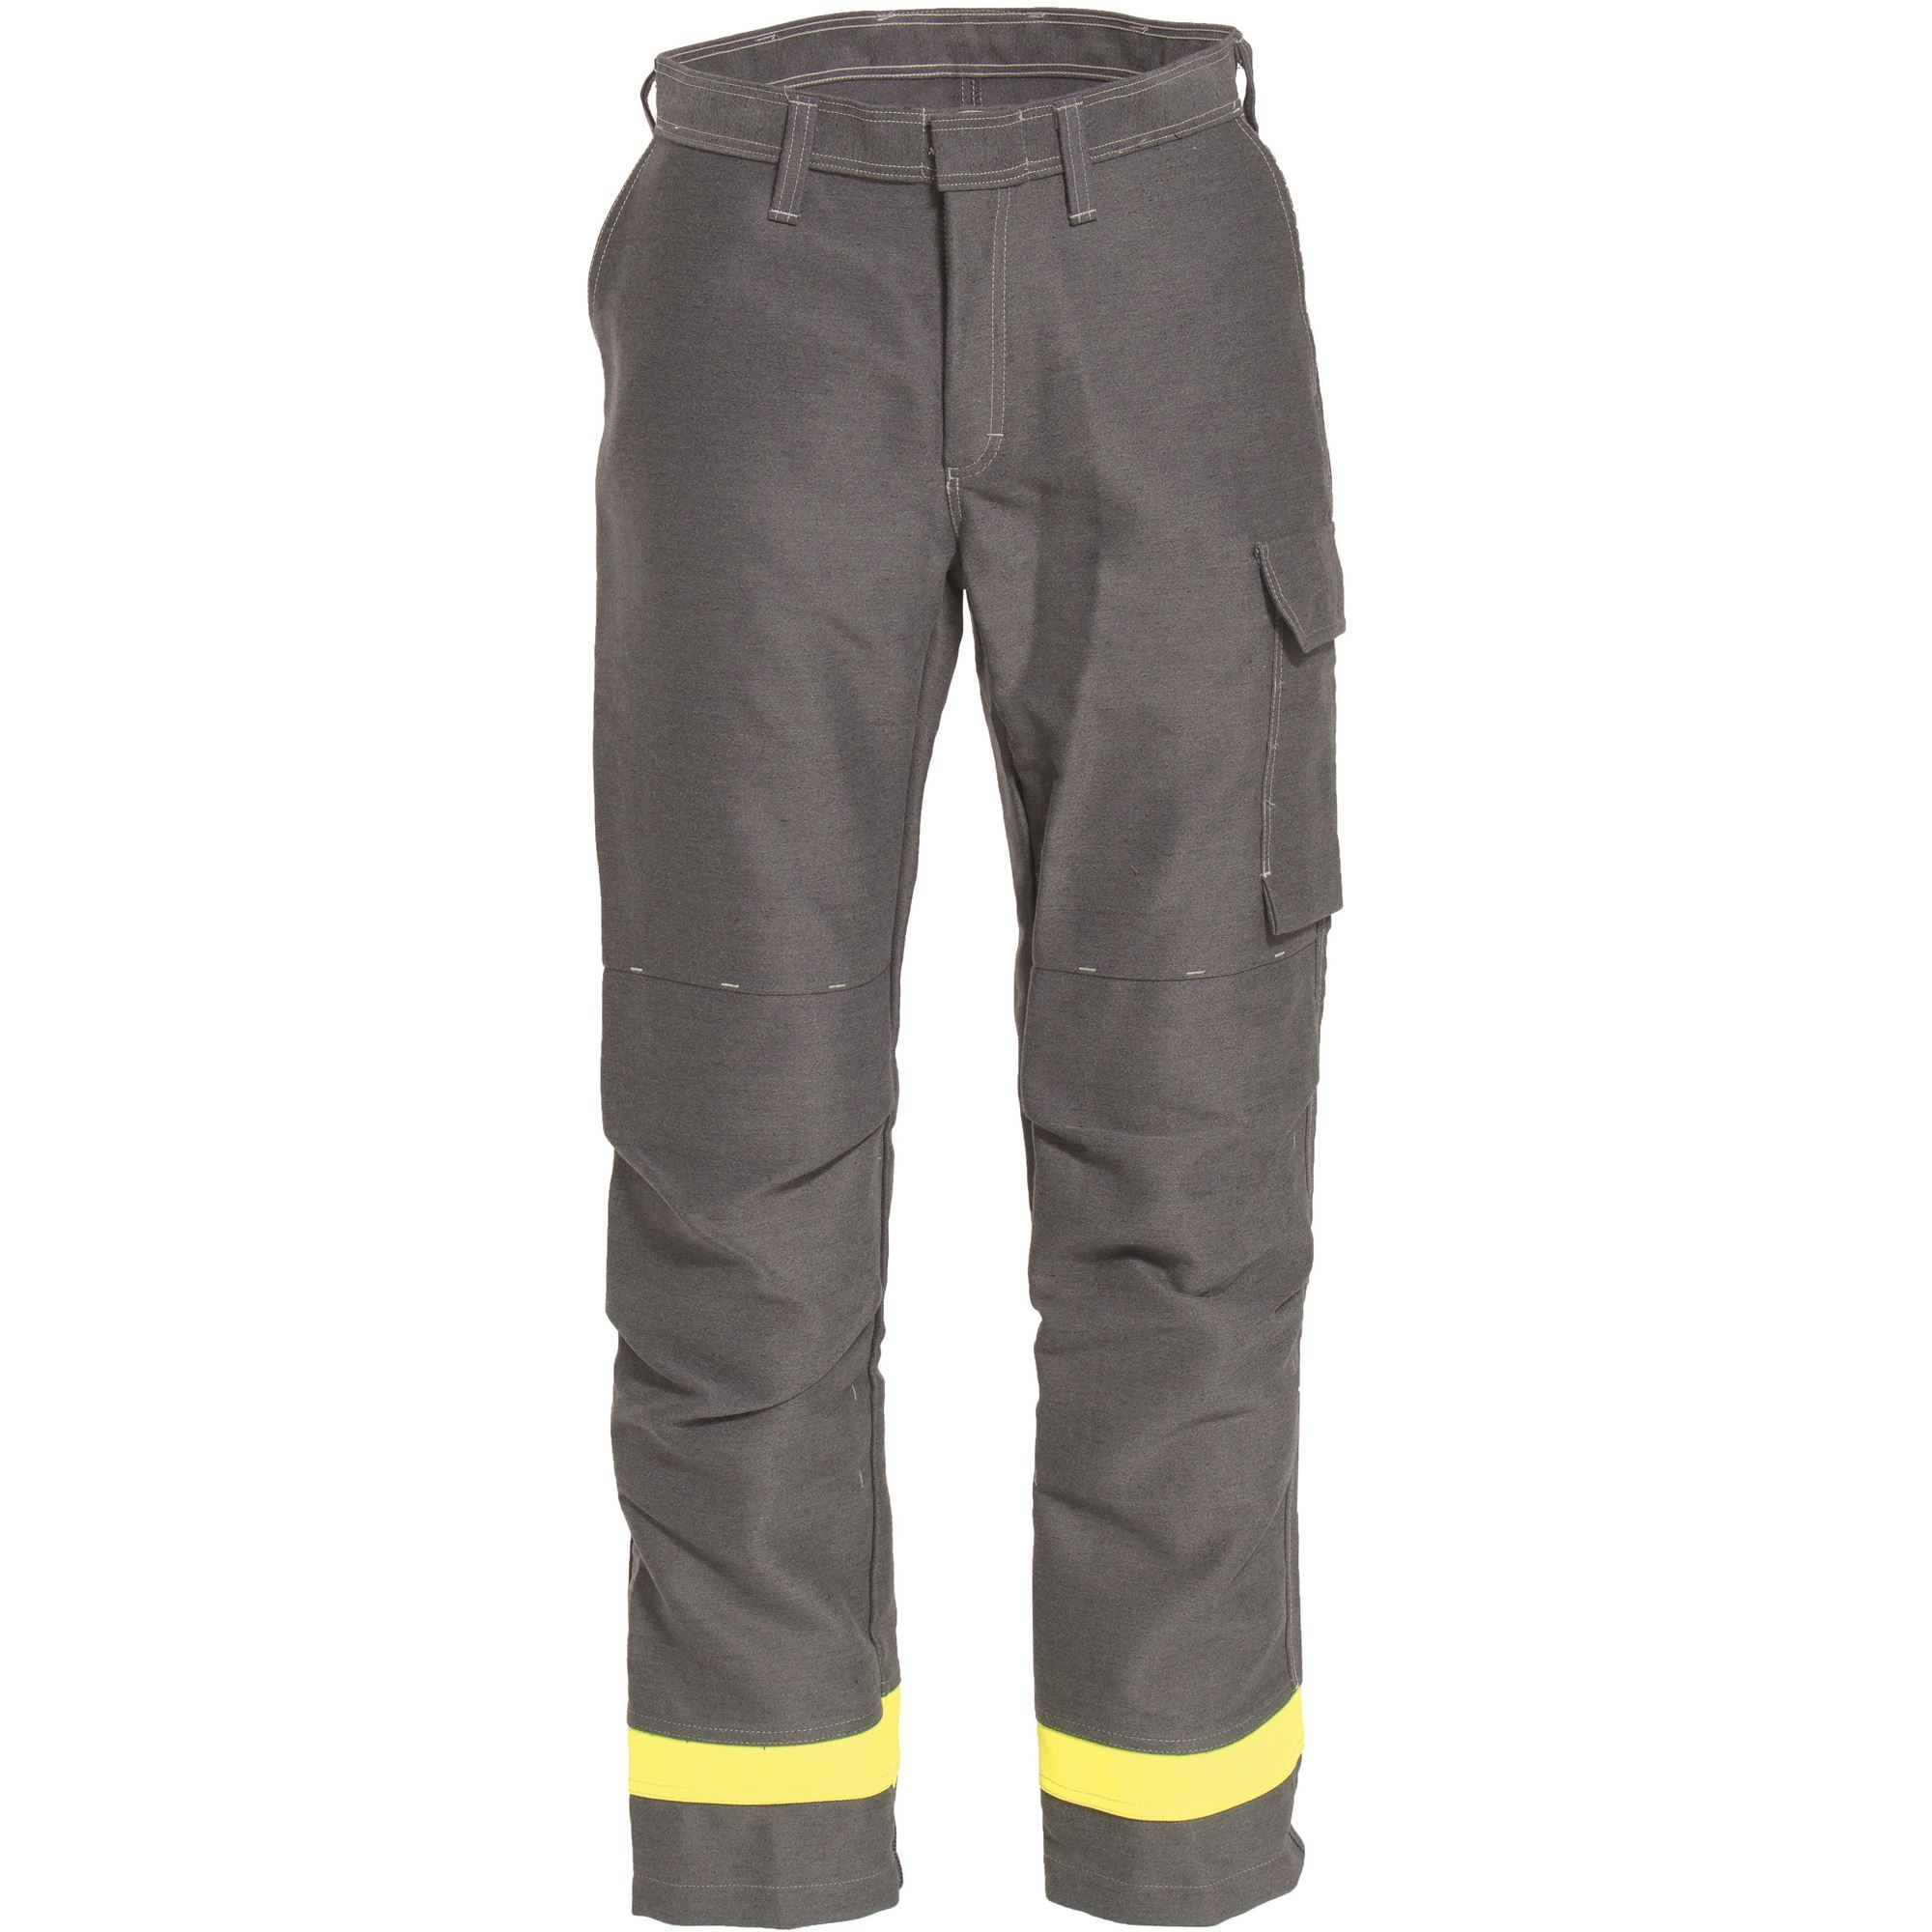 Mens Utility Carpenter Work Pants Demin Heavy Duty Cargo Construction  Trousers | eBay